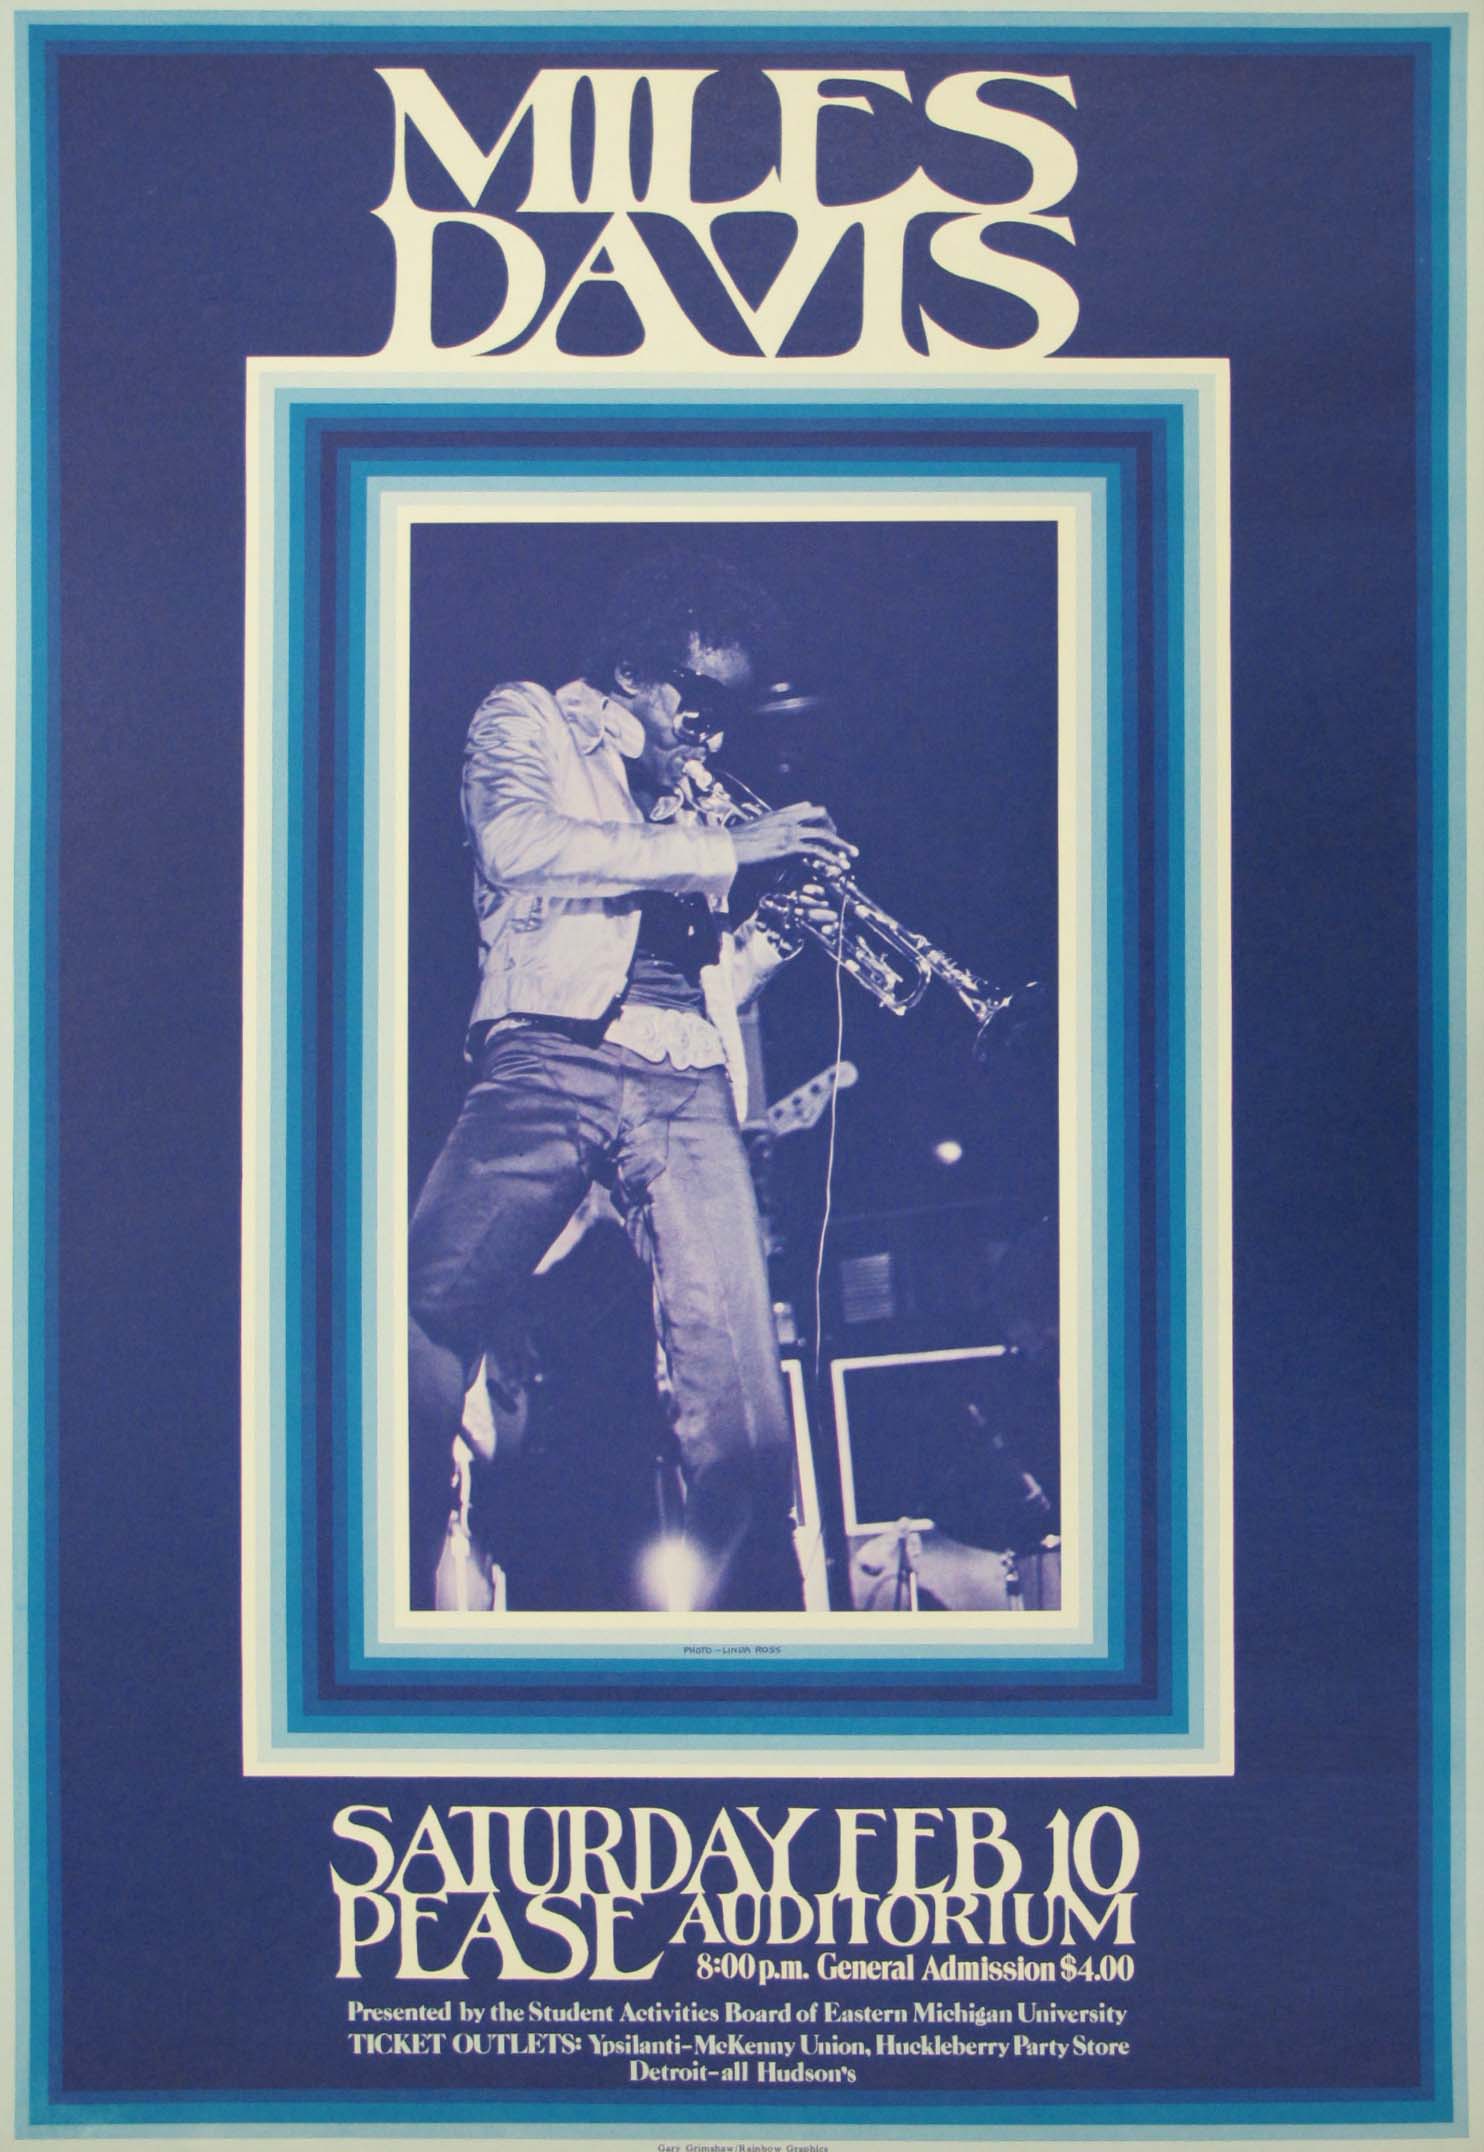 Miles Davis Concert Poster